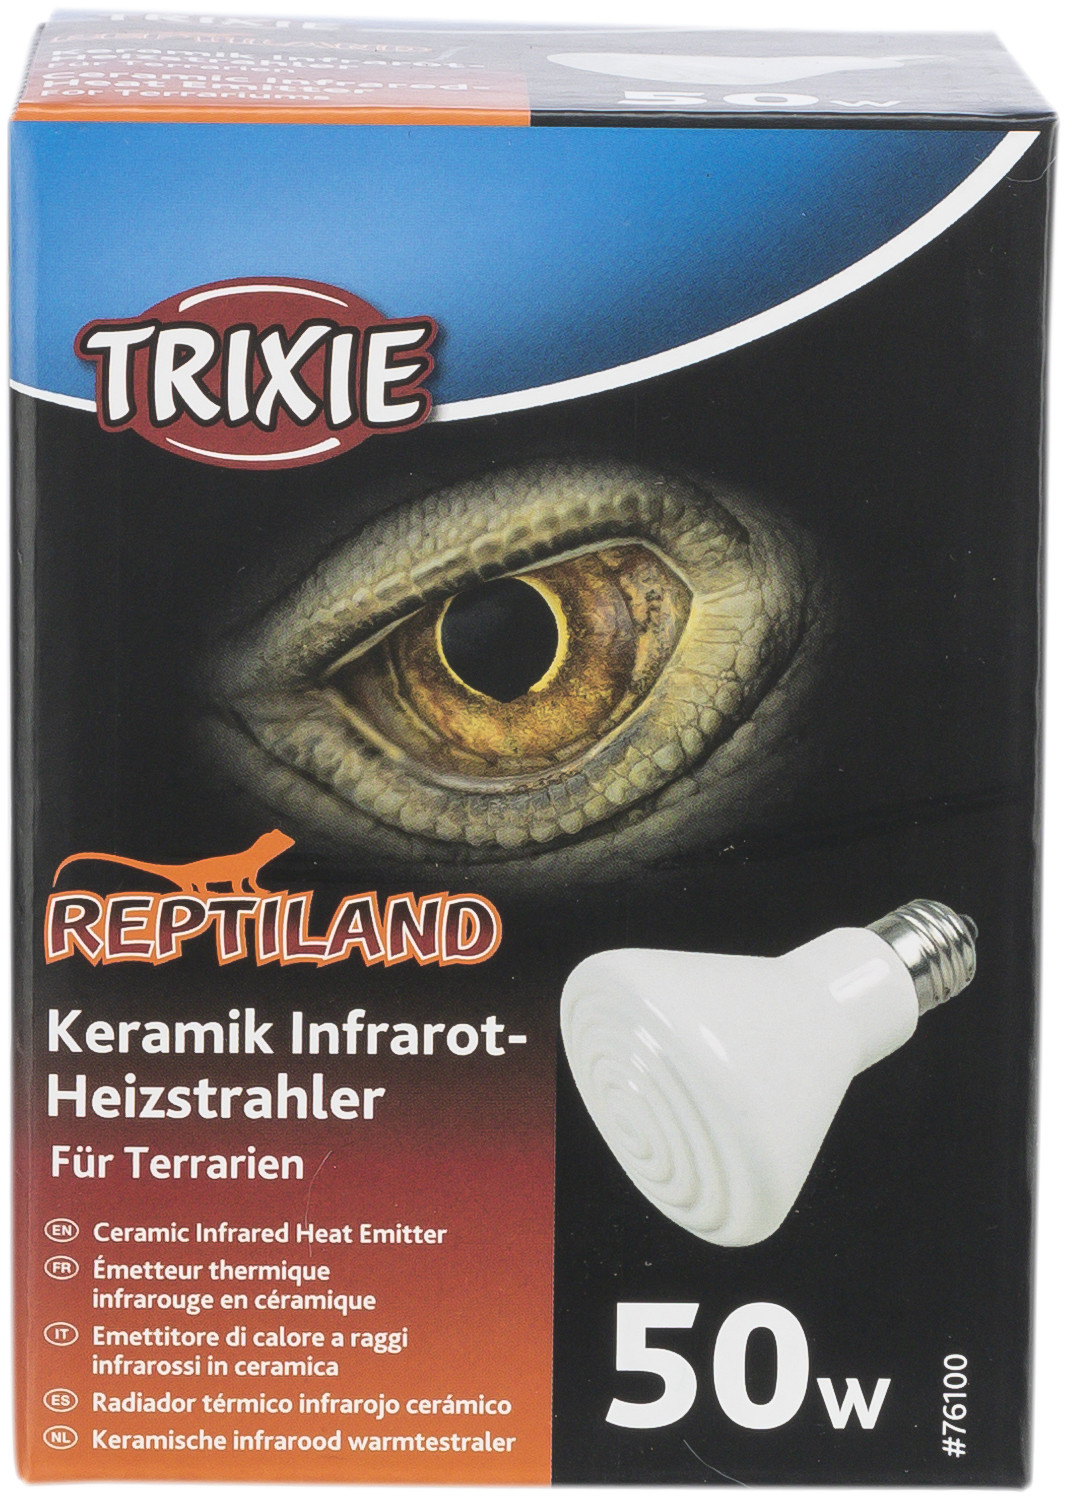 Keramik-Infrarot-Heizstrahler Trixie Reptiland